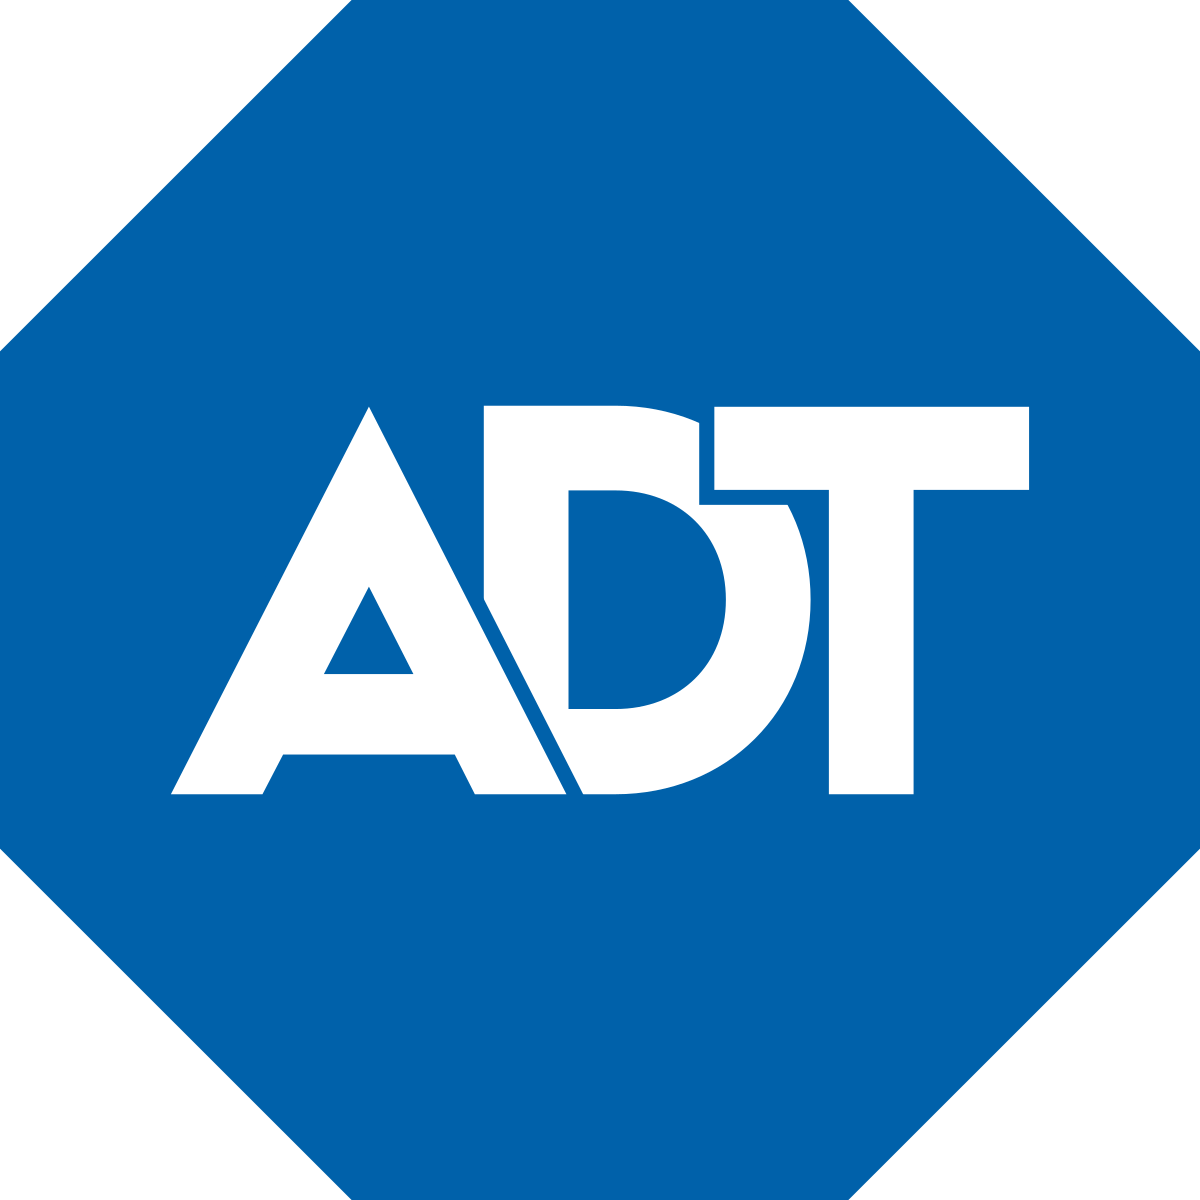 ADT Corporation